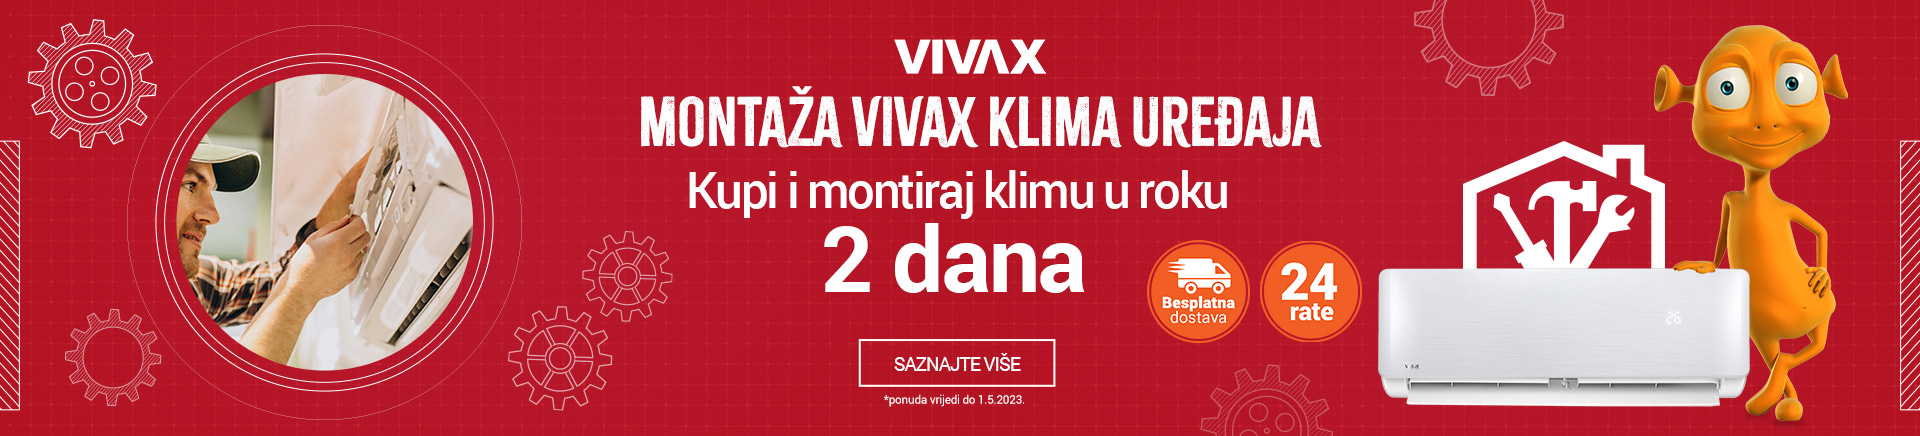 BA~Montaza vivax klima 2022 banner 2 MOBILE 380 X 436.jpg